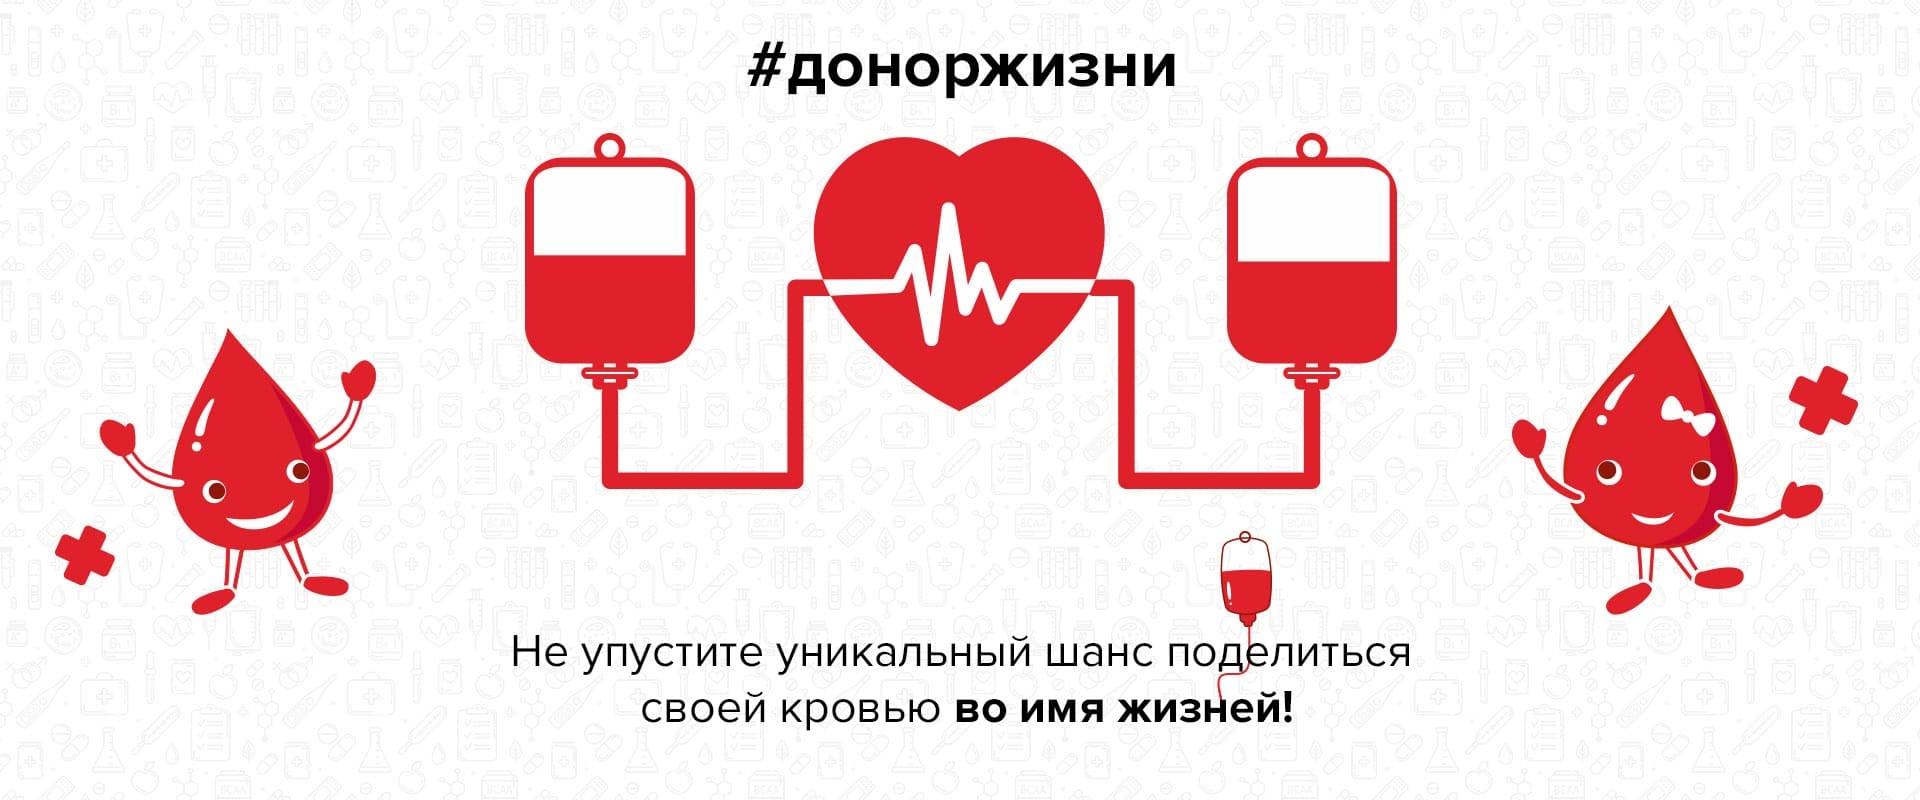 Донор информации. Донорство картинки. Донорство крови плакат. Донорство рисунок. Донорство крови рисунок.